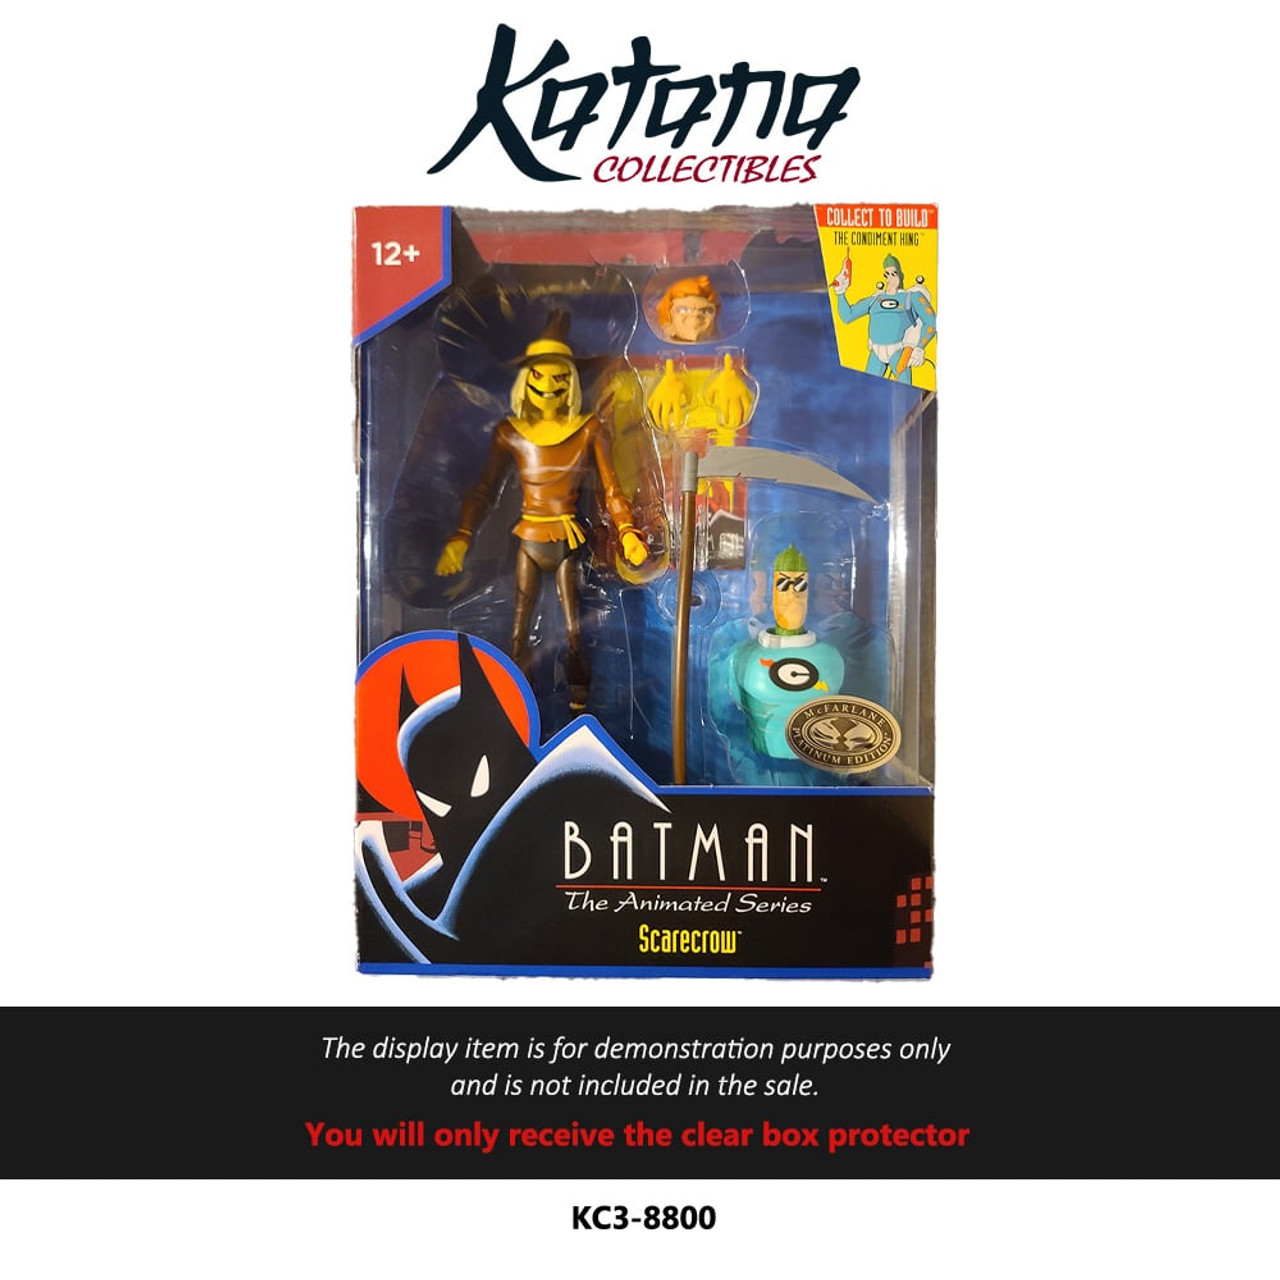 Katana Collectibles Protector For Batman the Animated Series: Scarecrow